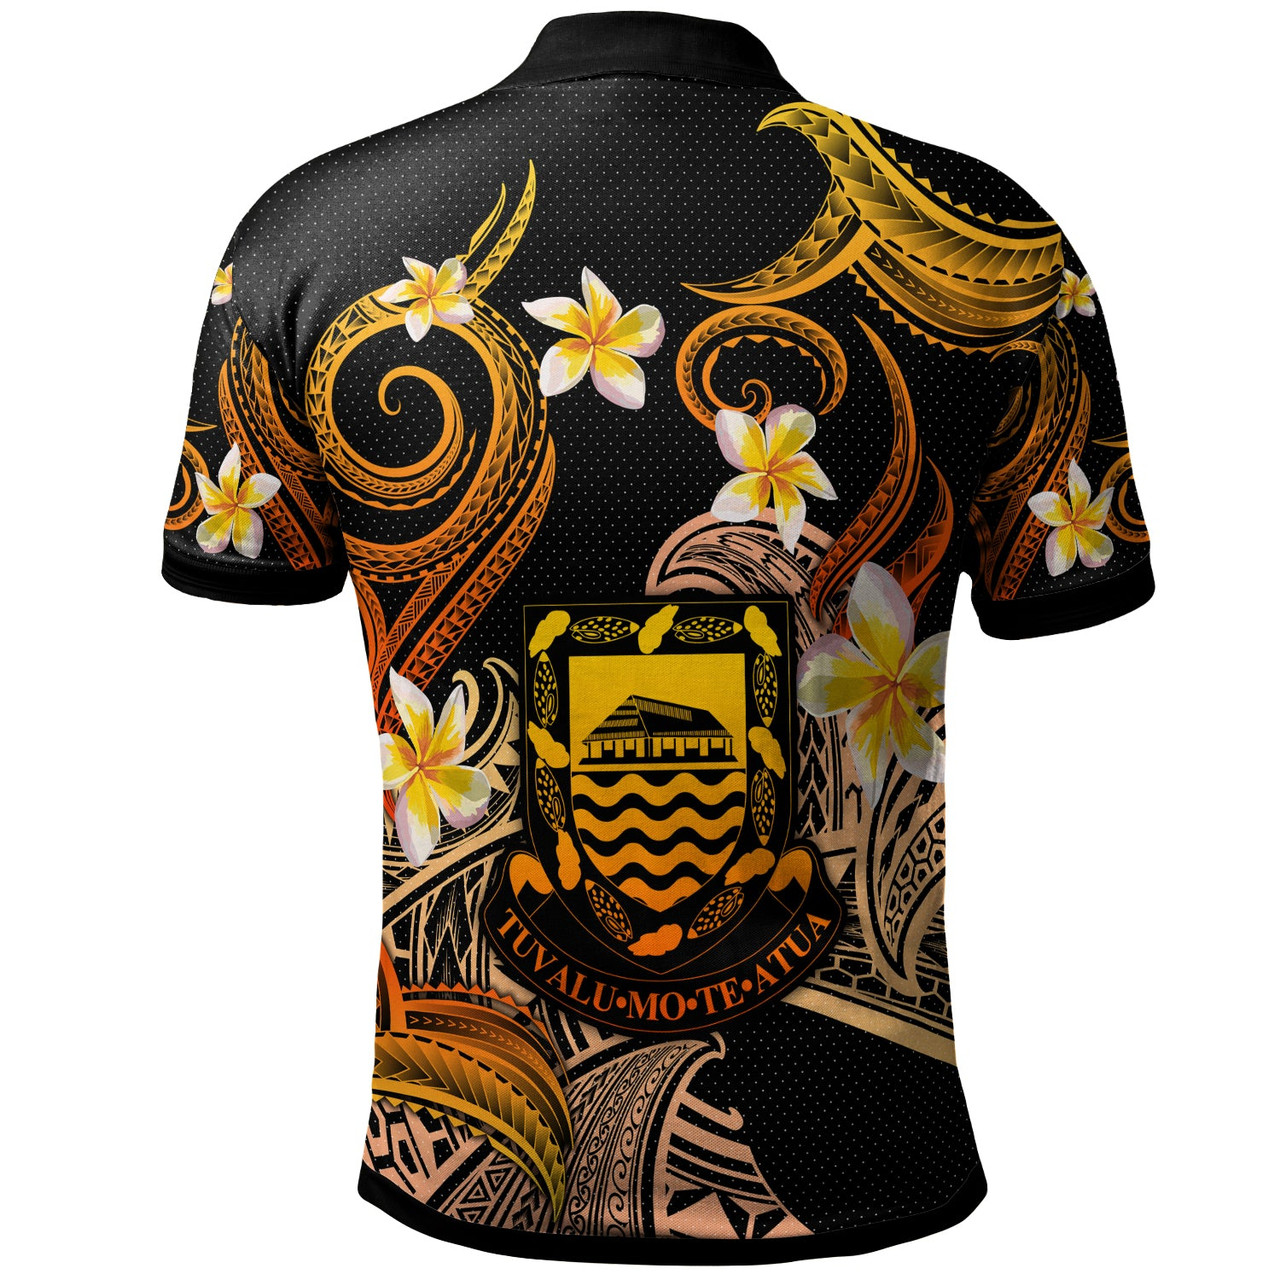 Tuvalu Polo Shirt - Custom Personalised Polynesian Waves with Plumeria Flowers (Orange)